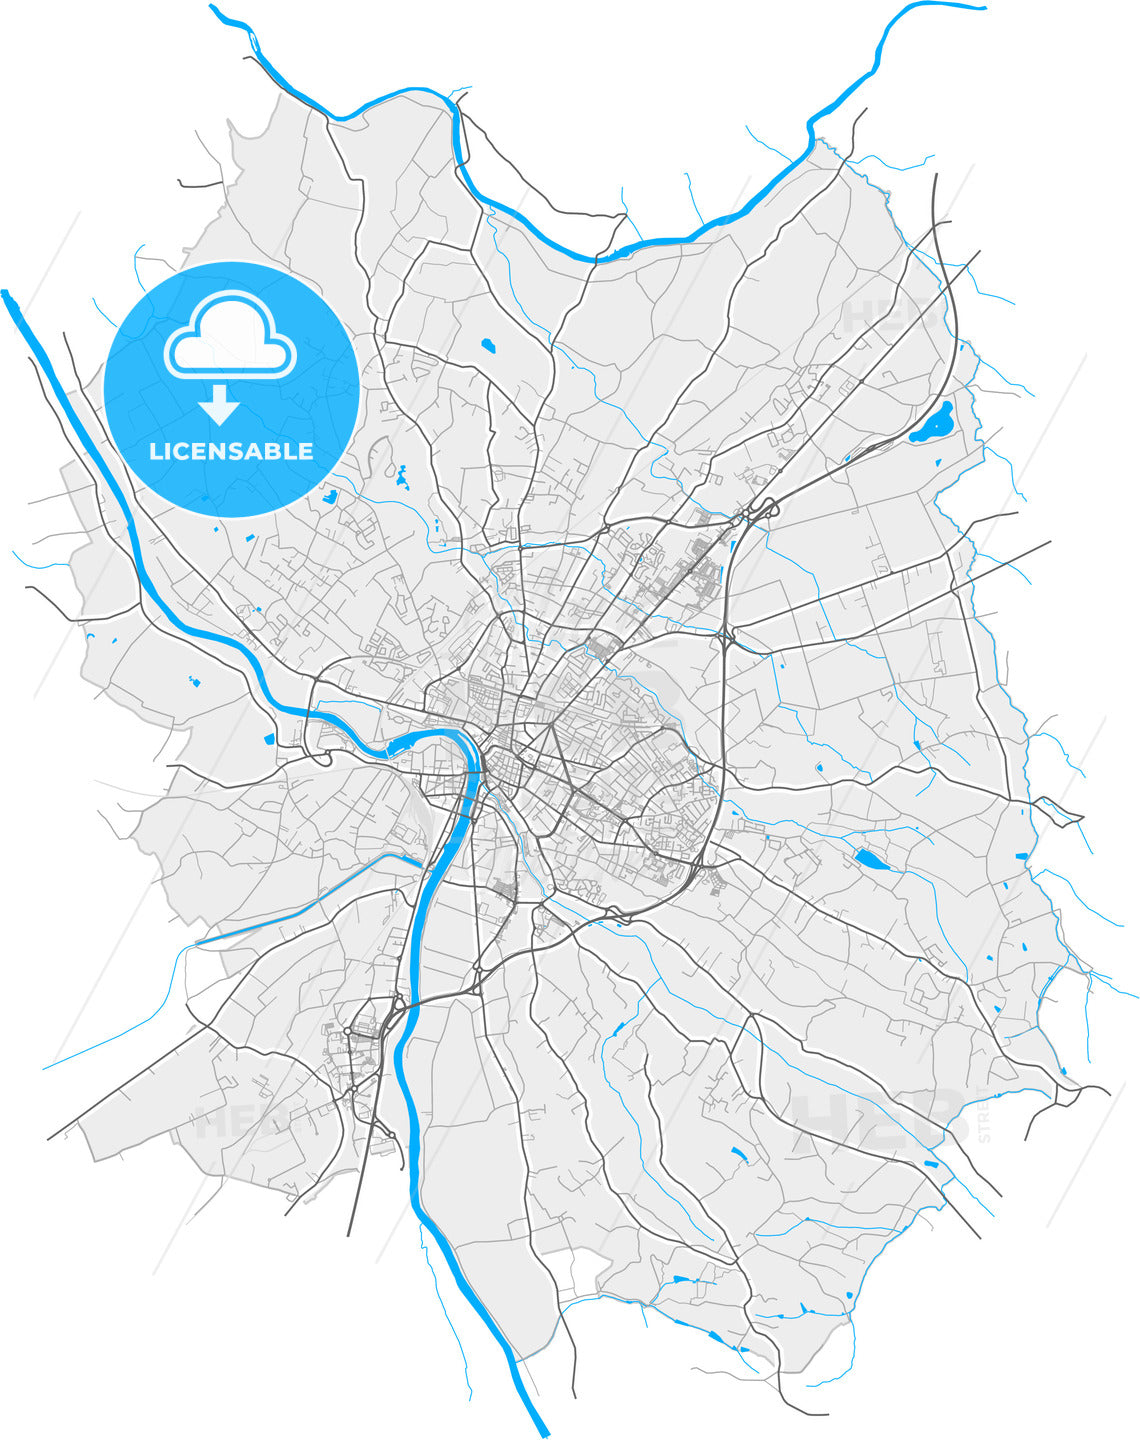 Montauban, Tarn-et-Garonne, France, high quality vector map